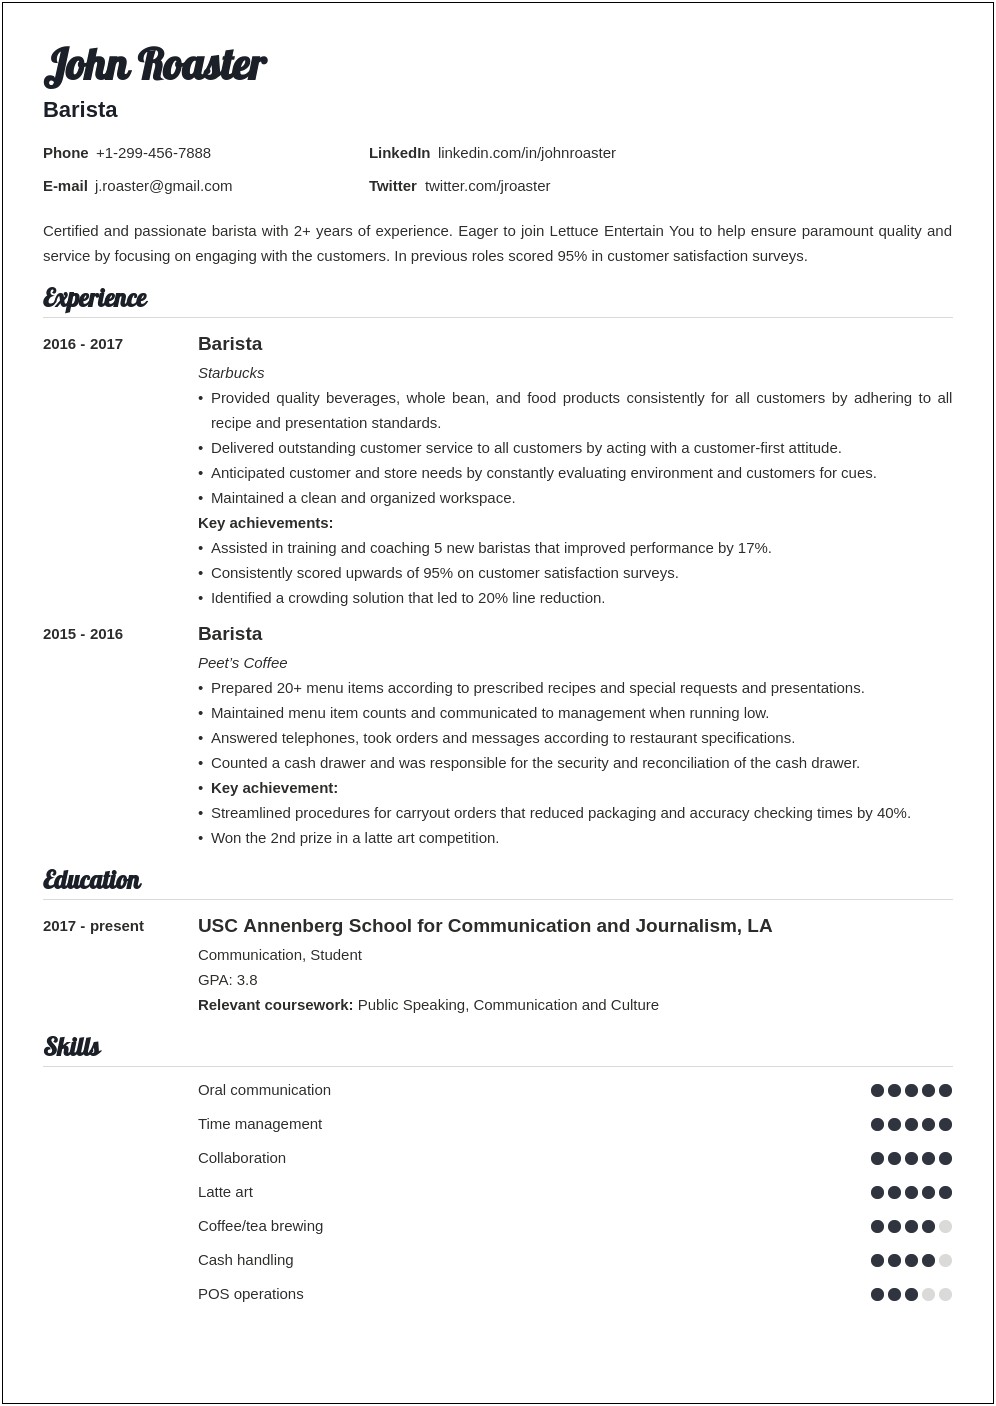 Resume Job Description For Starbucks Barista